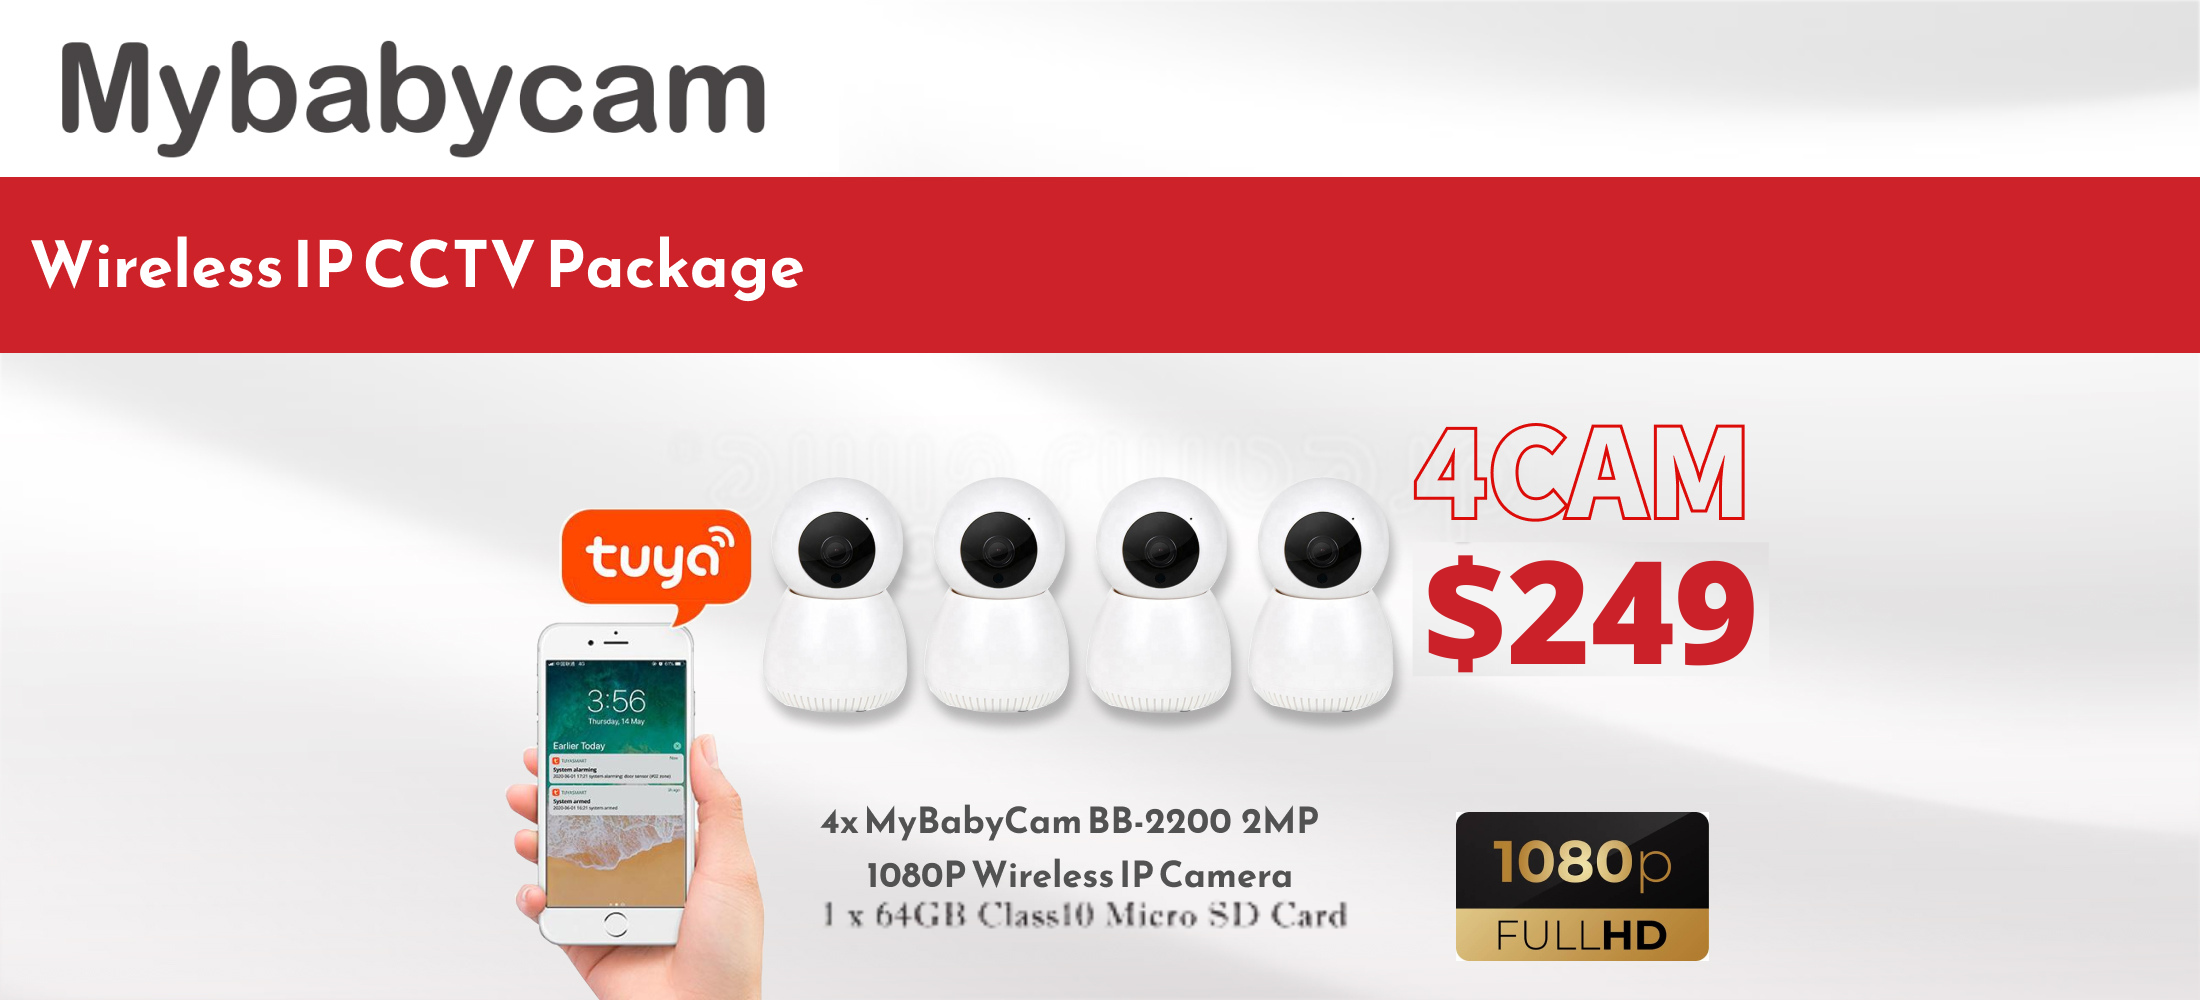 4 CAM Mybabycam Wireless IP CCTV Package  $249.00